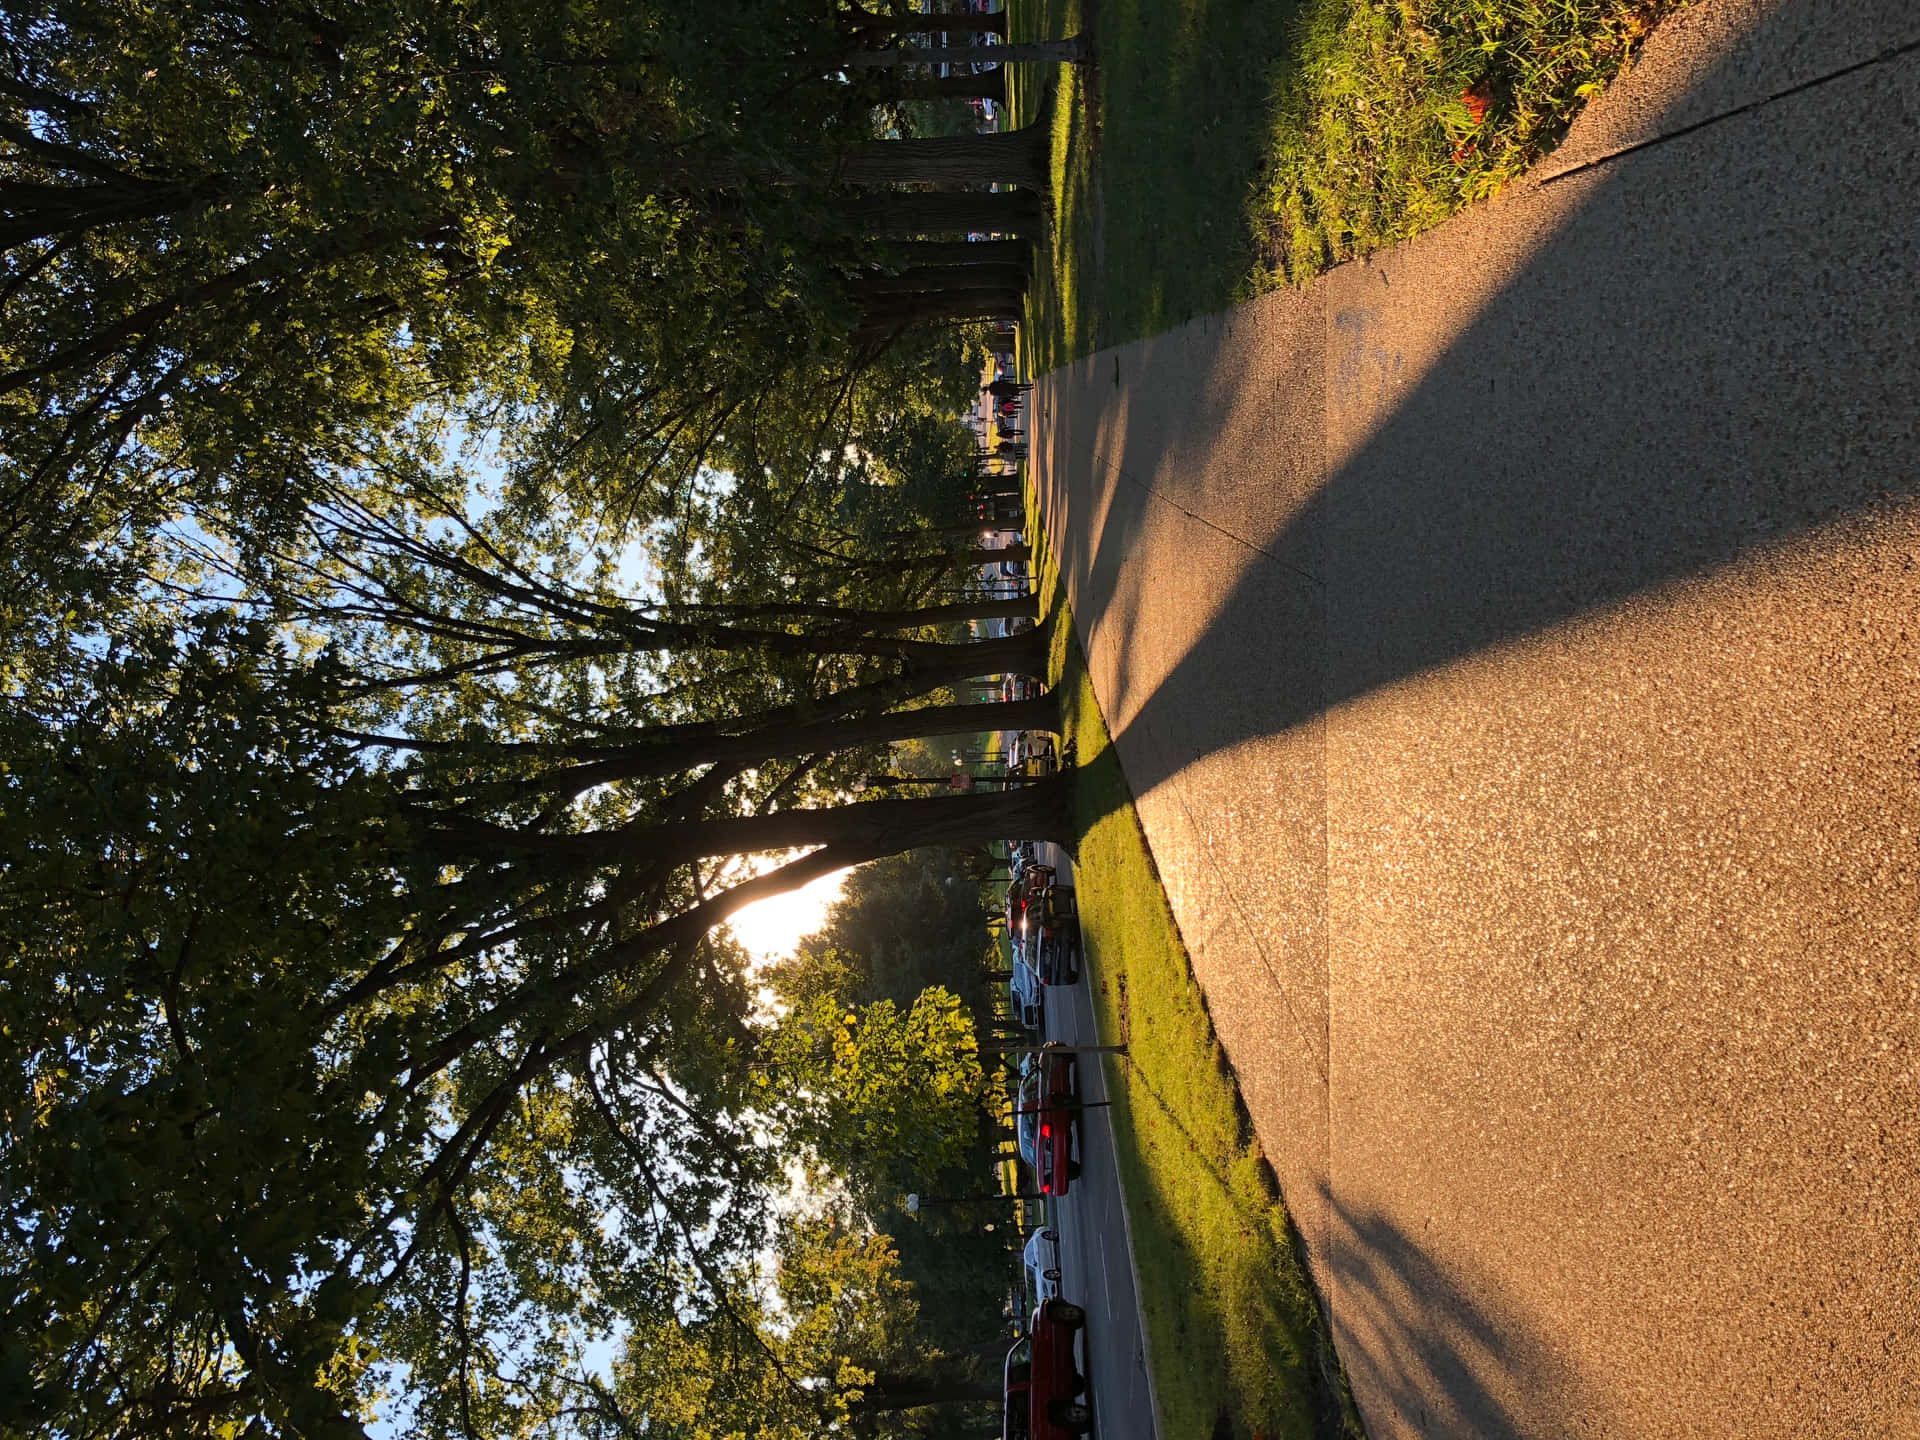 Stroll down a calming, tree-lined sidewalk.